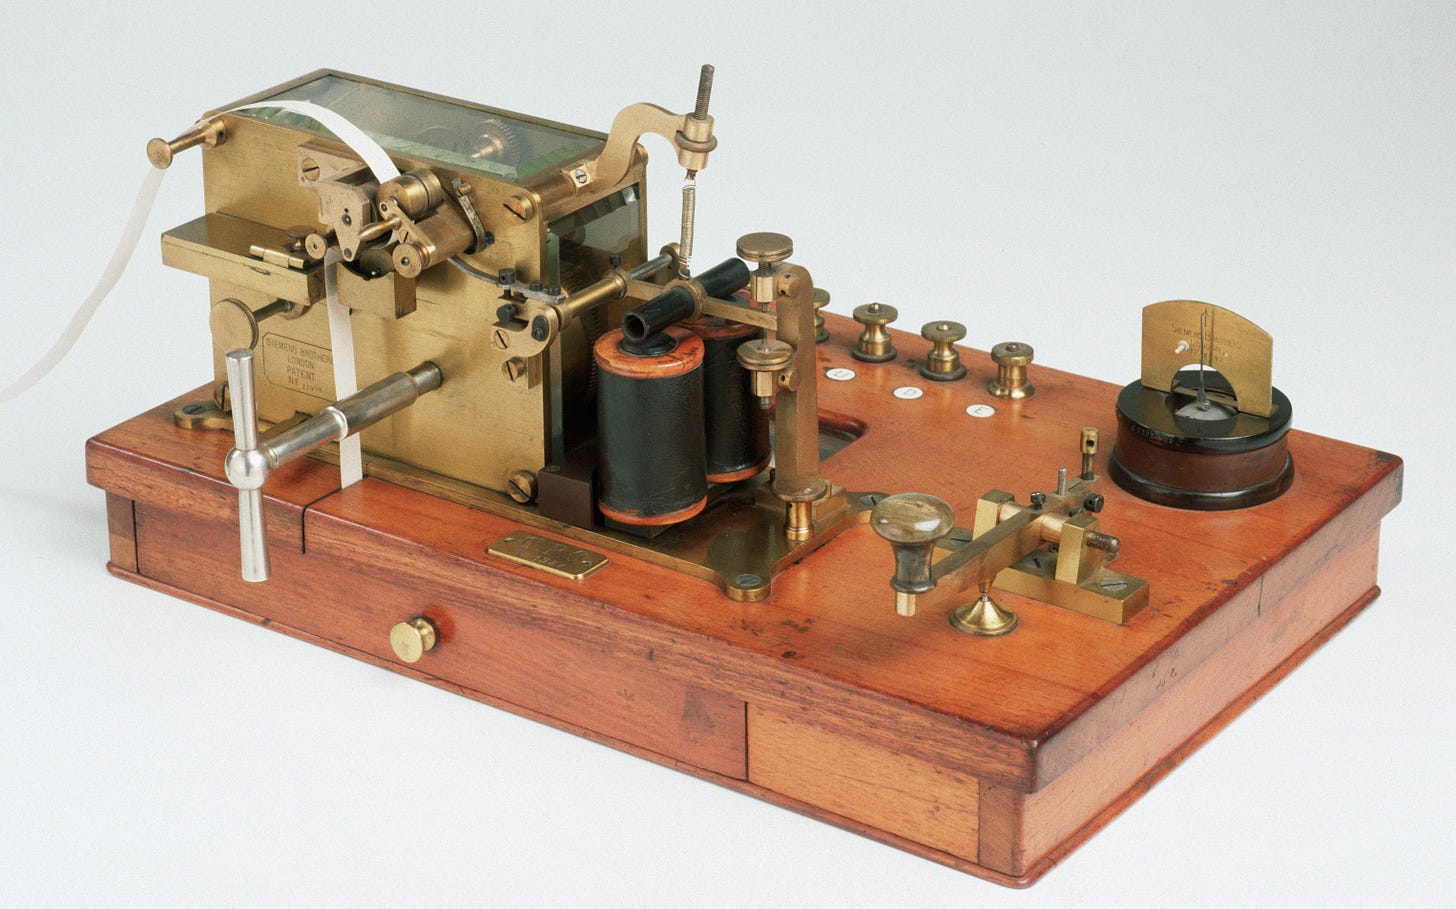 Morse Code & Telegraph: Invention & Samuel Morse - HISTORY